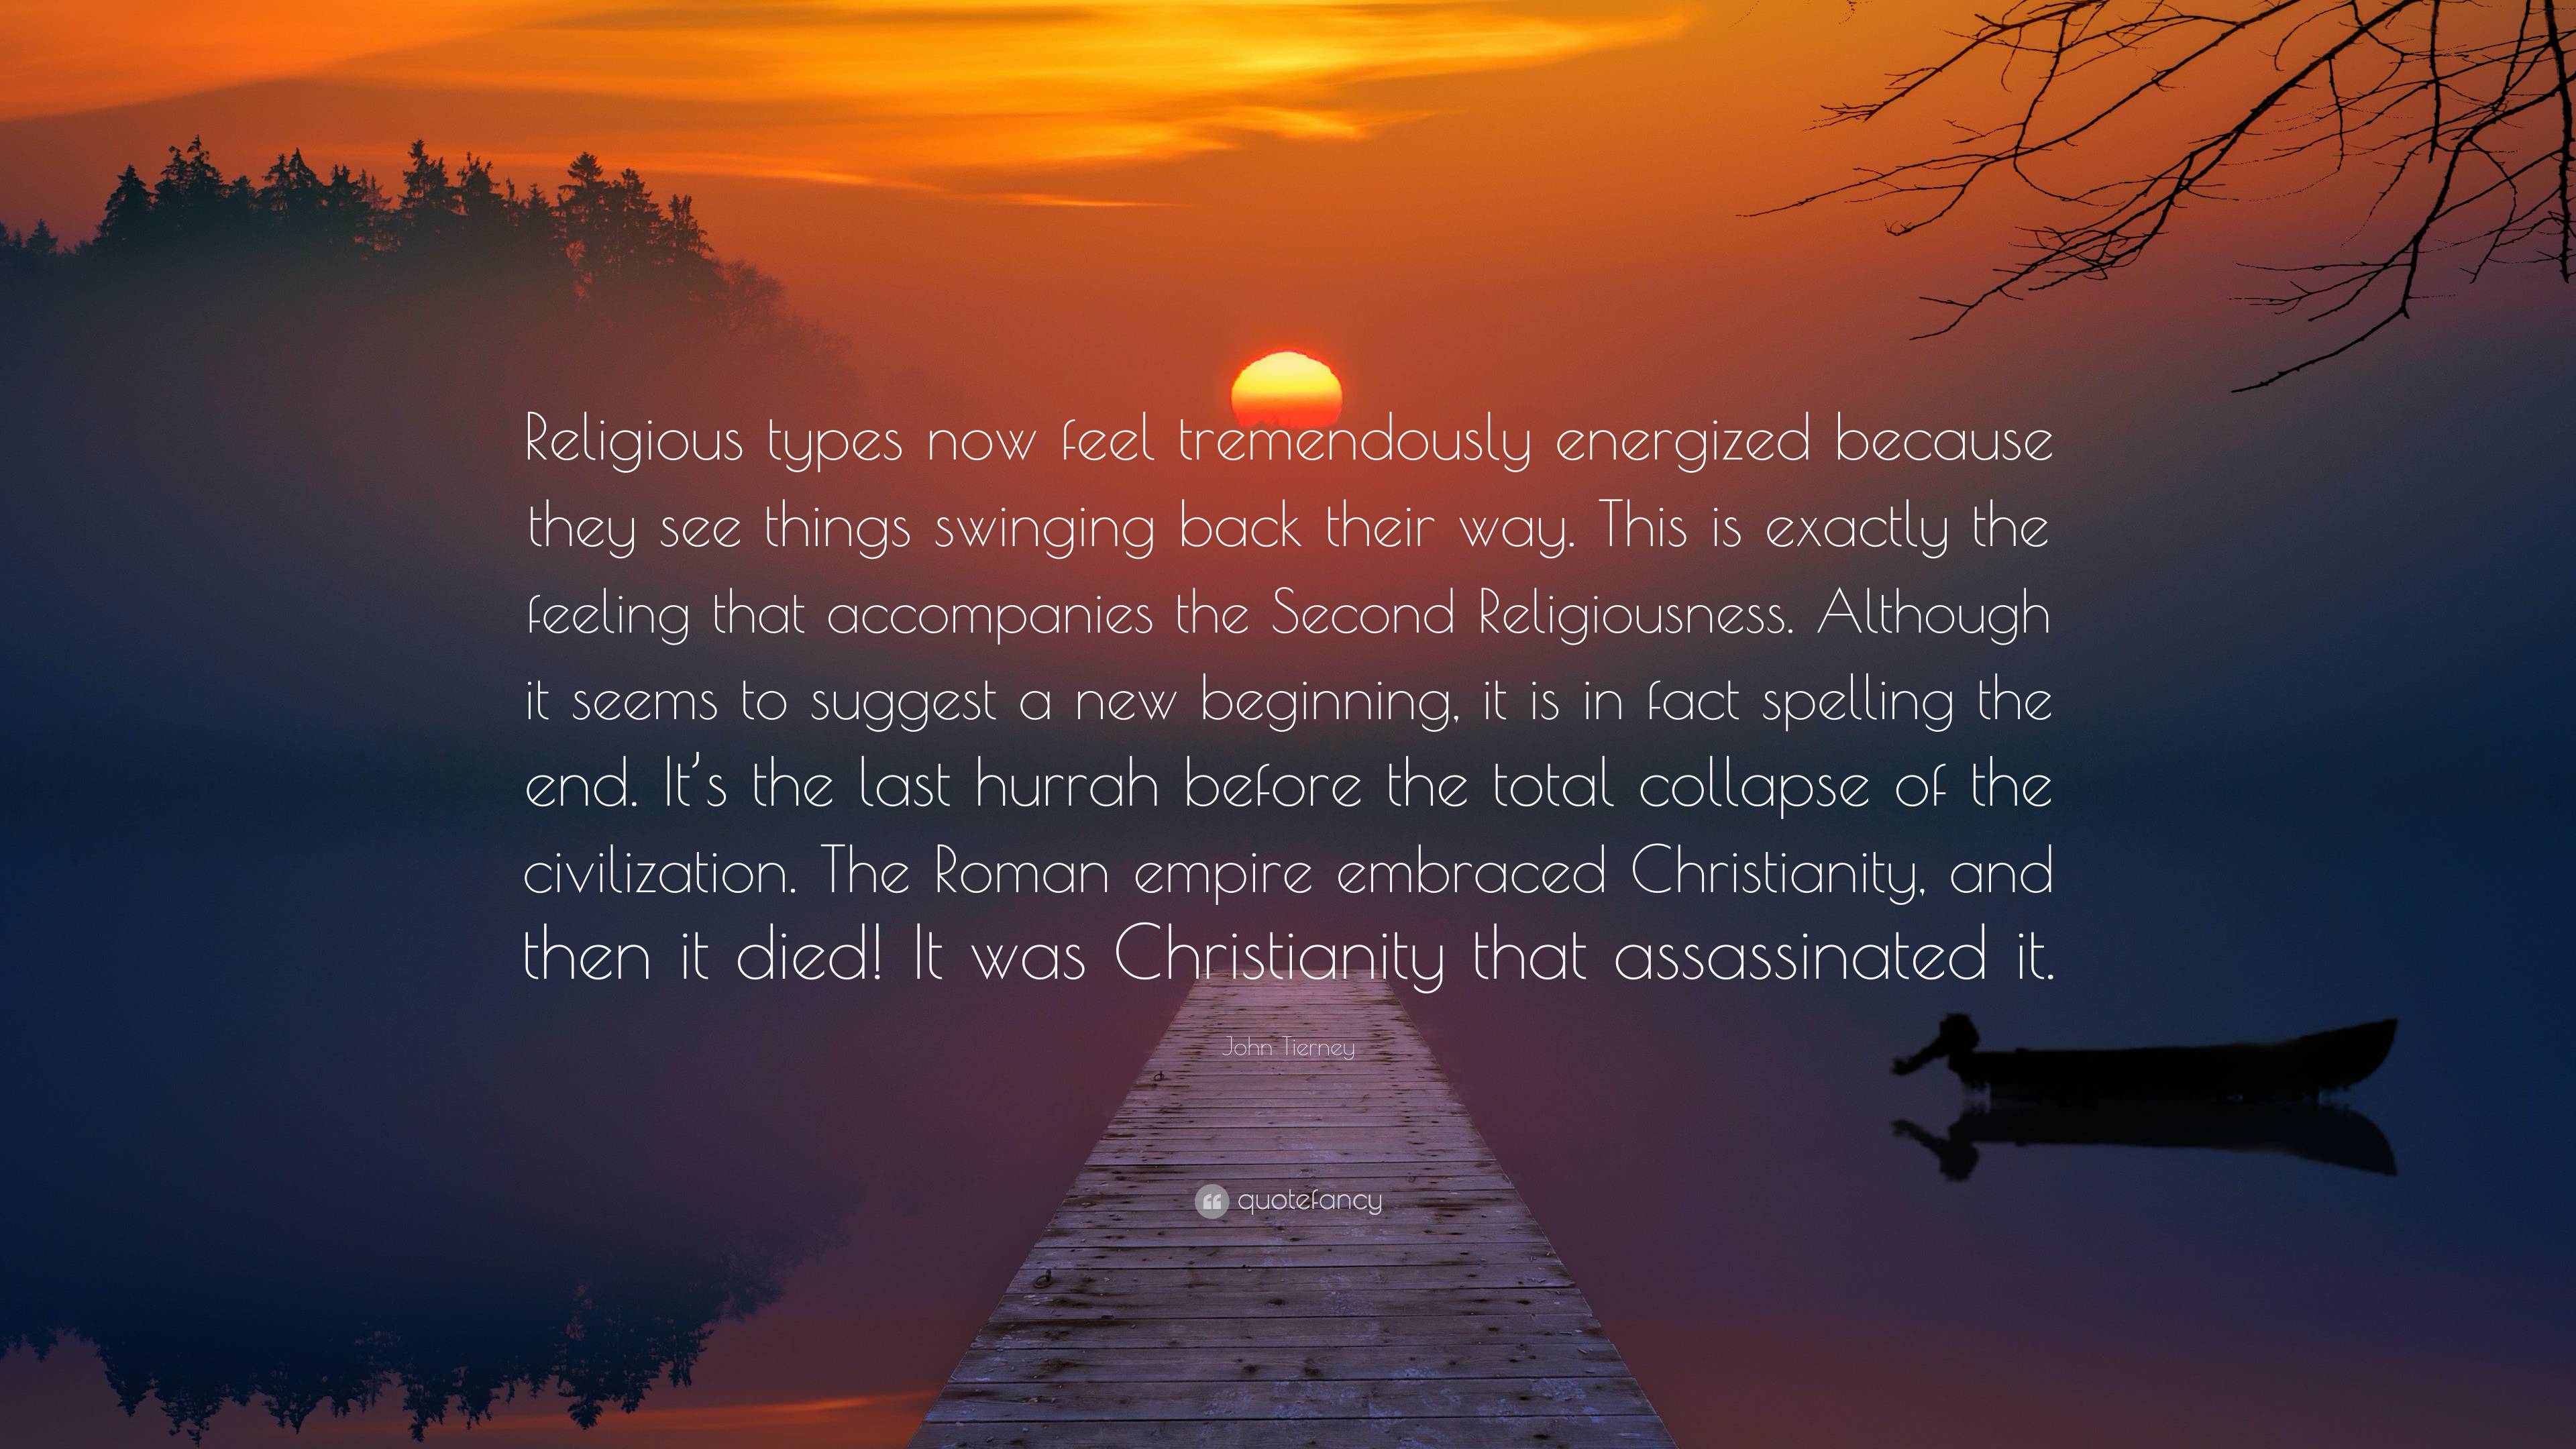 John Tierney Quote: “Religious types now feel tremendously energized ...